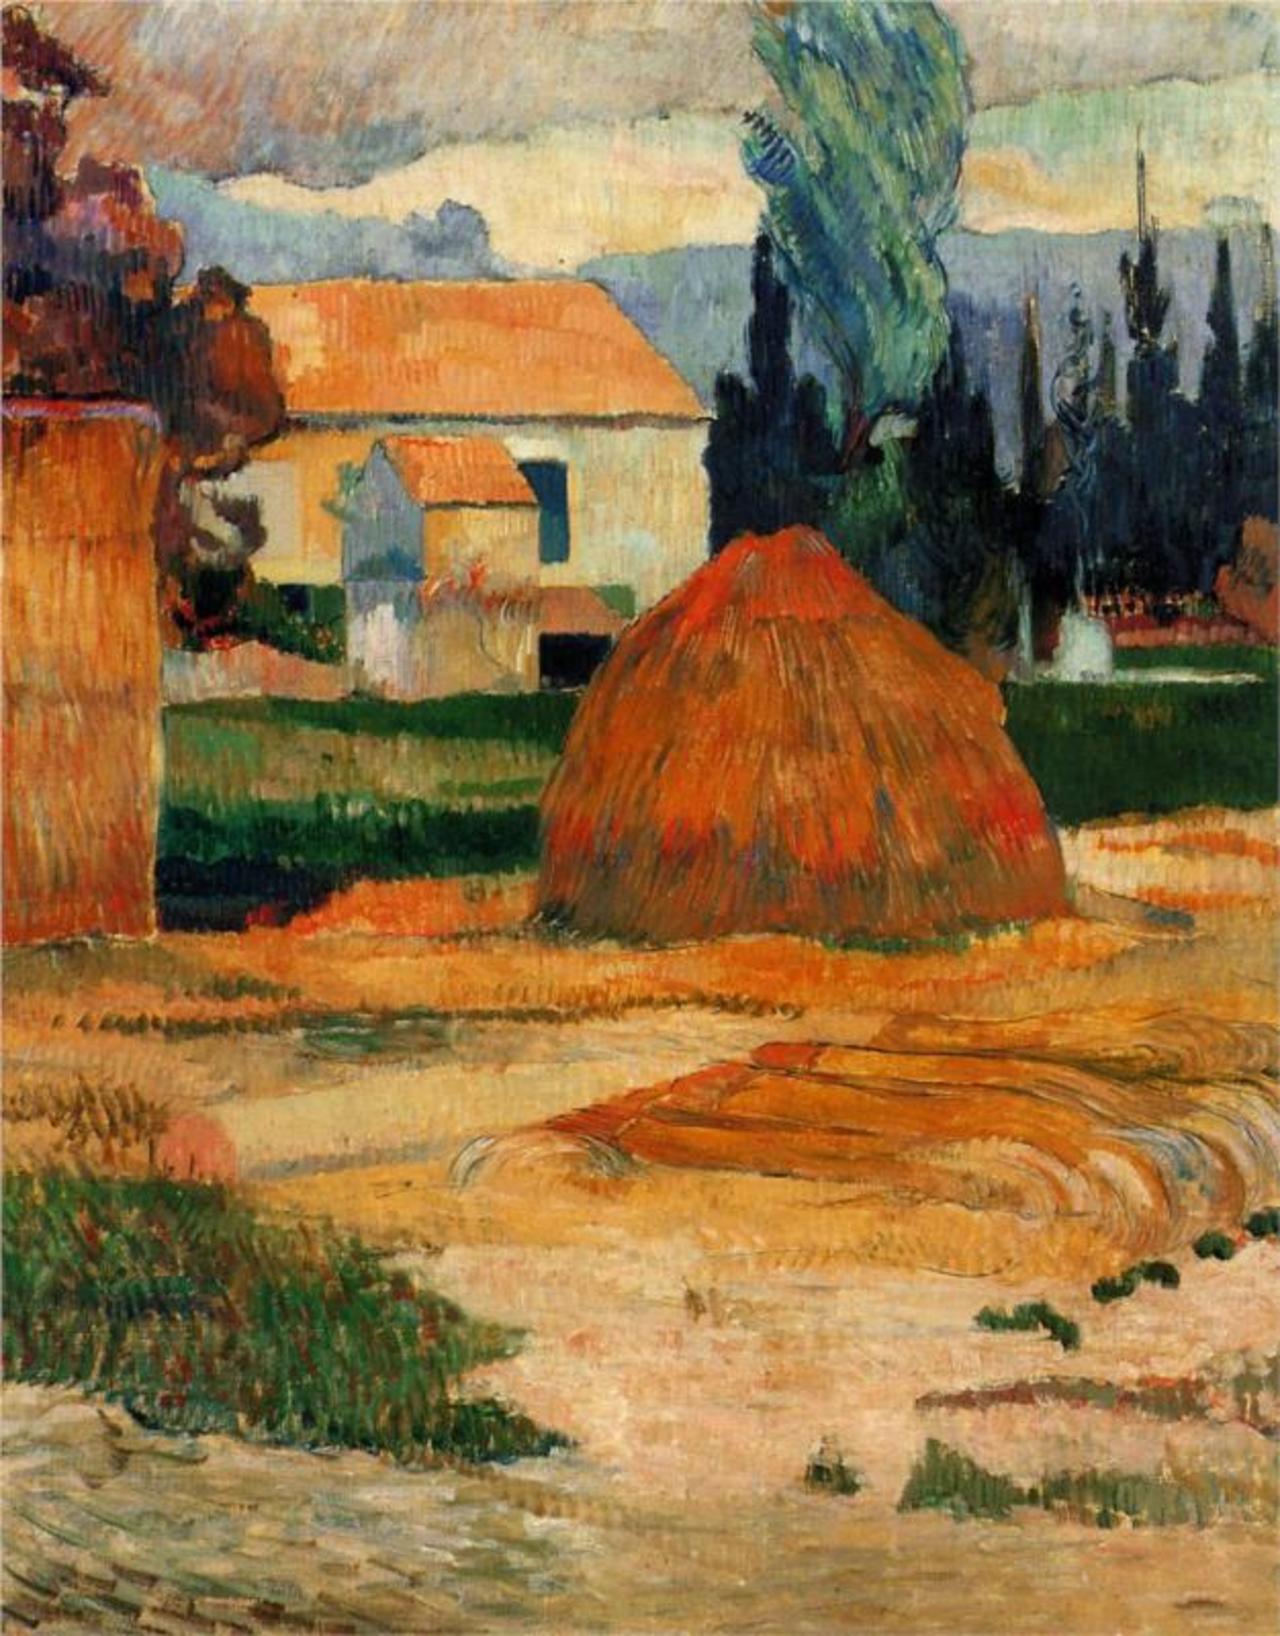 RT @avadesordre: #ArtePerLArte #natioggi #Gauguin Landscape near Arles
@PatriziaRametta @artdielle @elvisprendushi @MP27_ @caro_viola http://t.co/8Bk2HdO57b